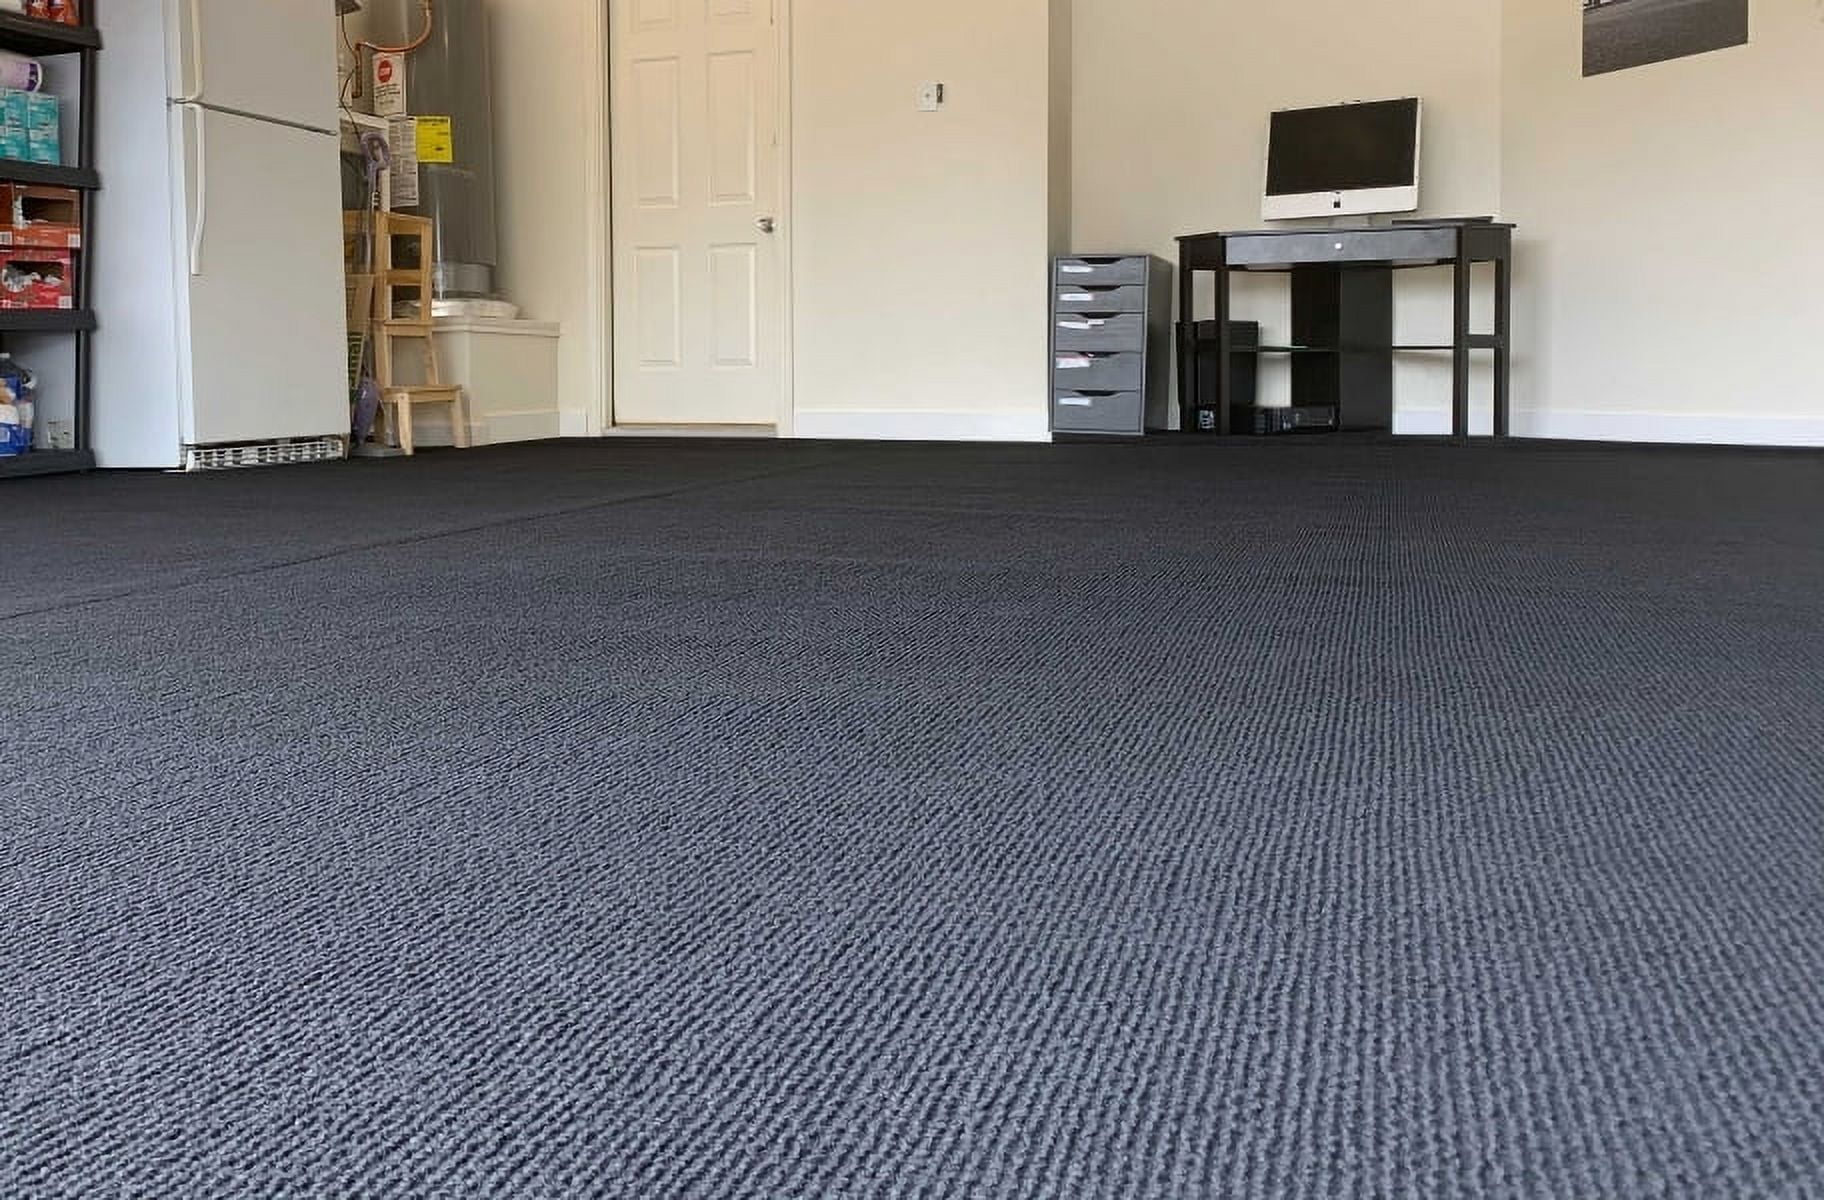 GARAGE GRIP 10'x17' Professional Grade Non Slip, Rugged, and Waterproof  Carpet Flooring Mat